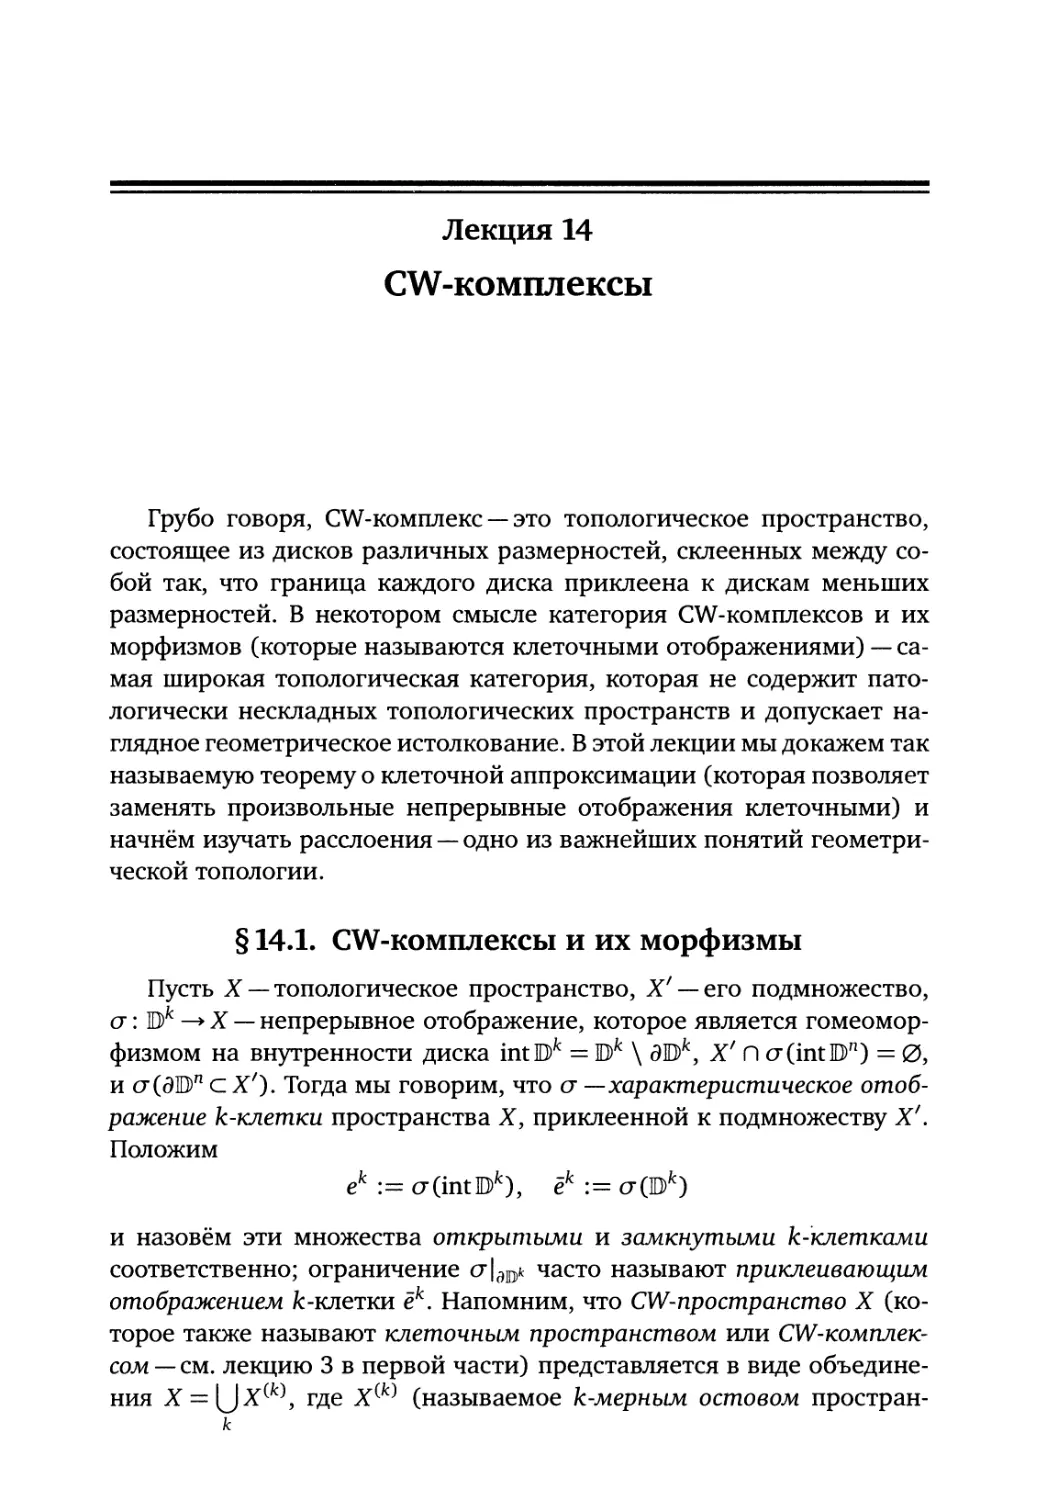 Лекция 14. CW-комплексы